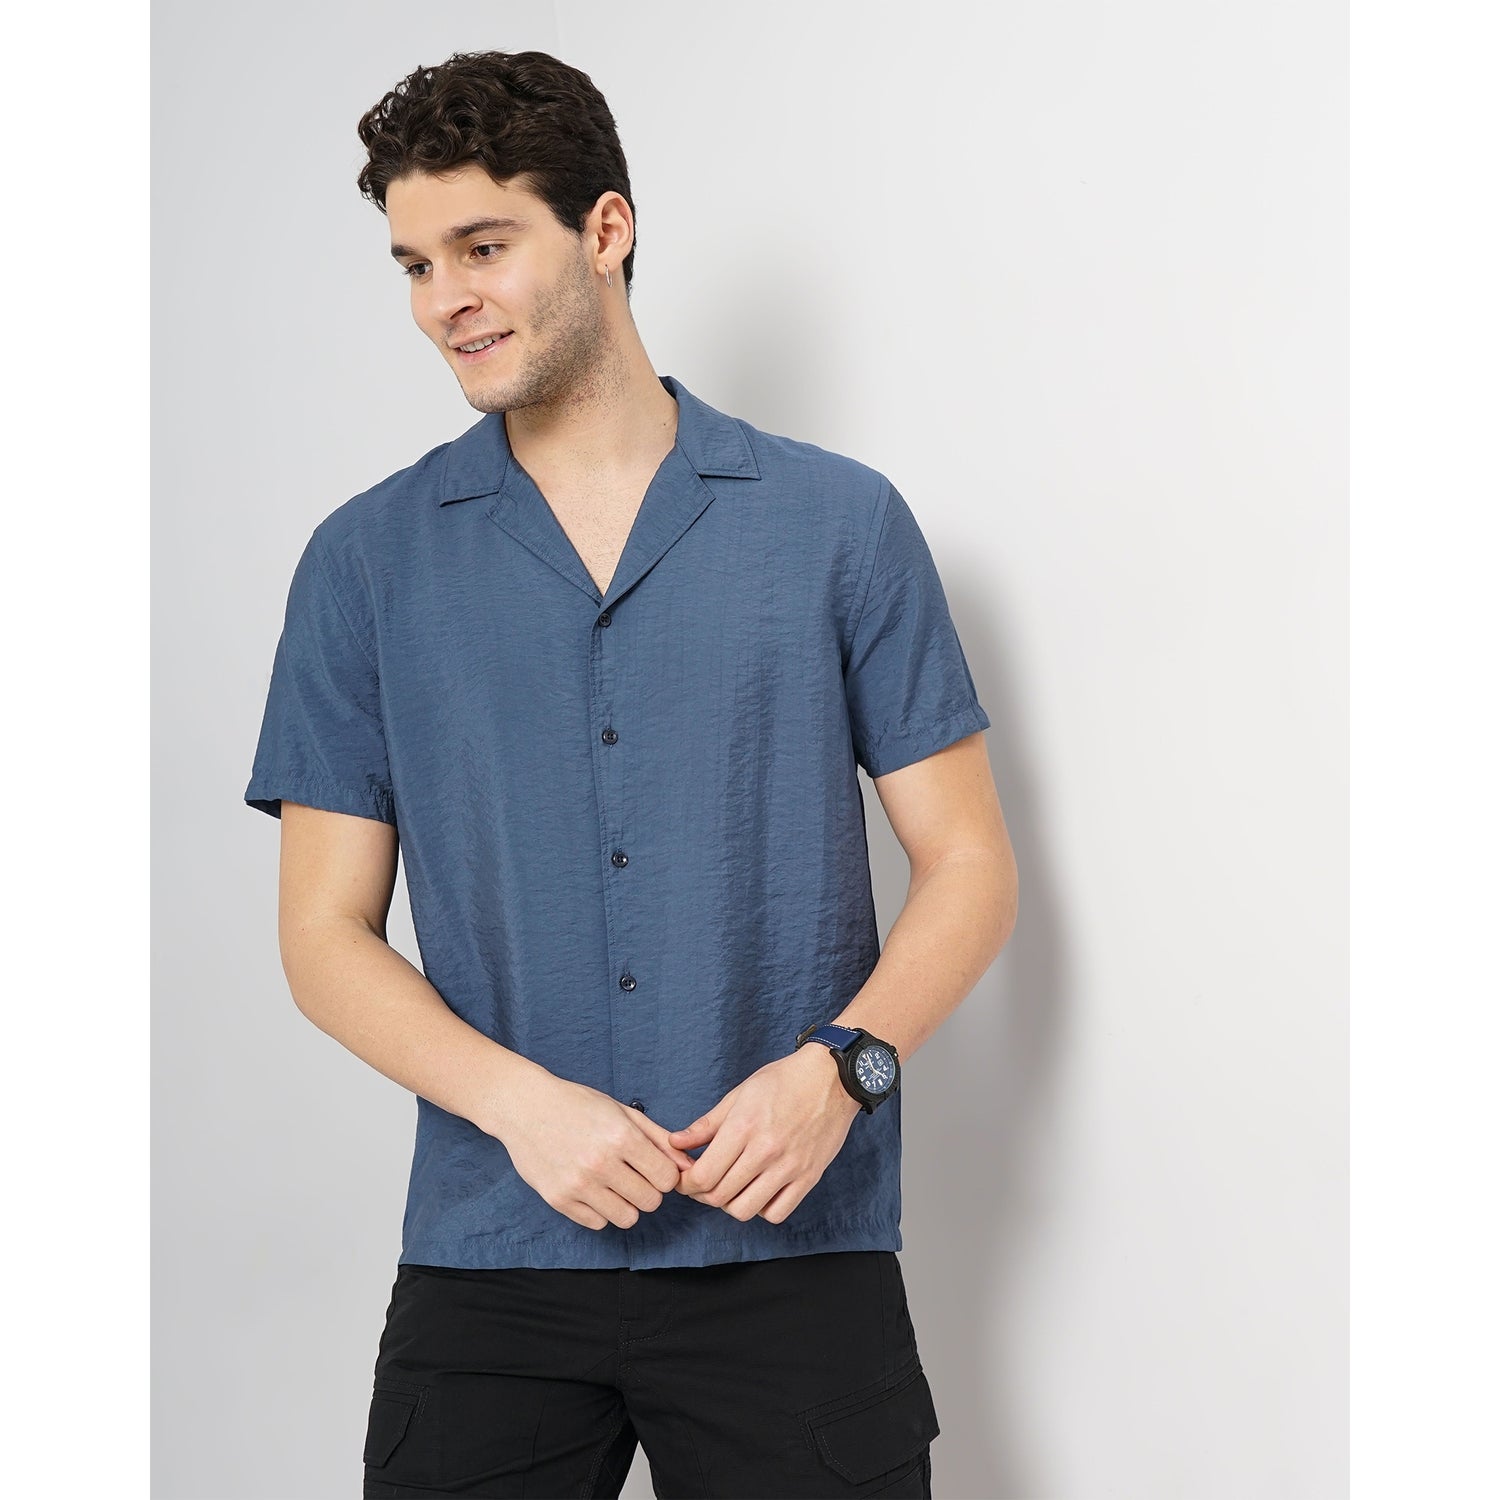 Men Blue Solid Regular Fit Viscose Rayon Soft Touch Casual Shirt (FAVISCUB)